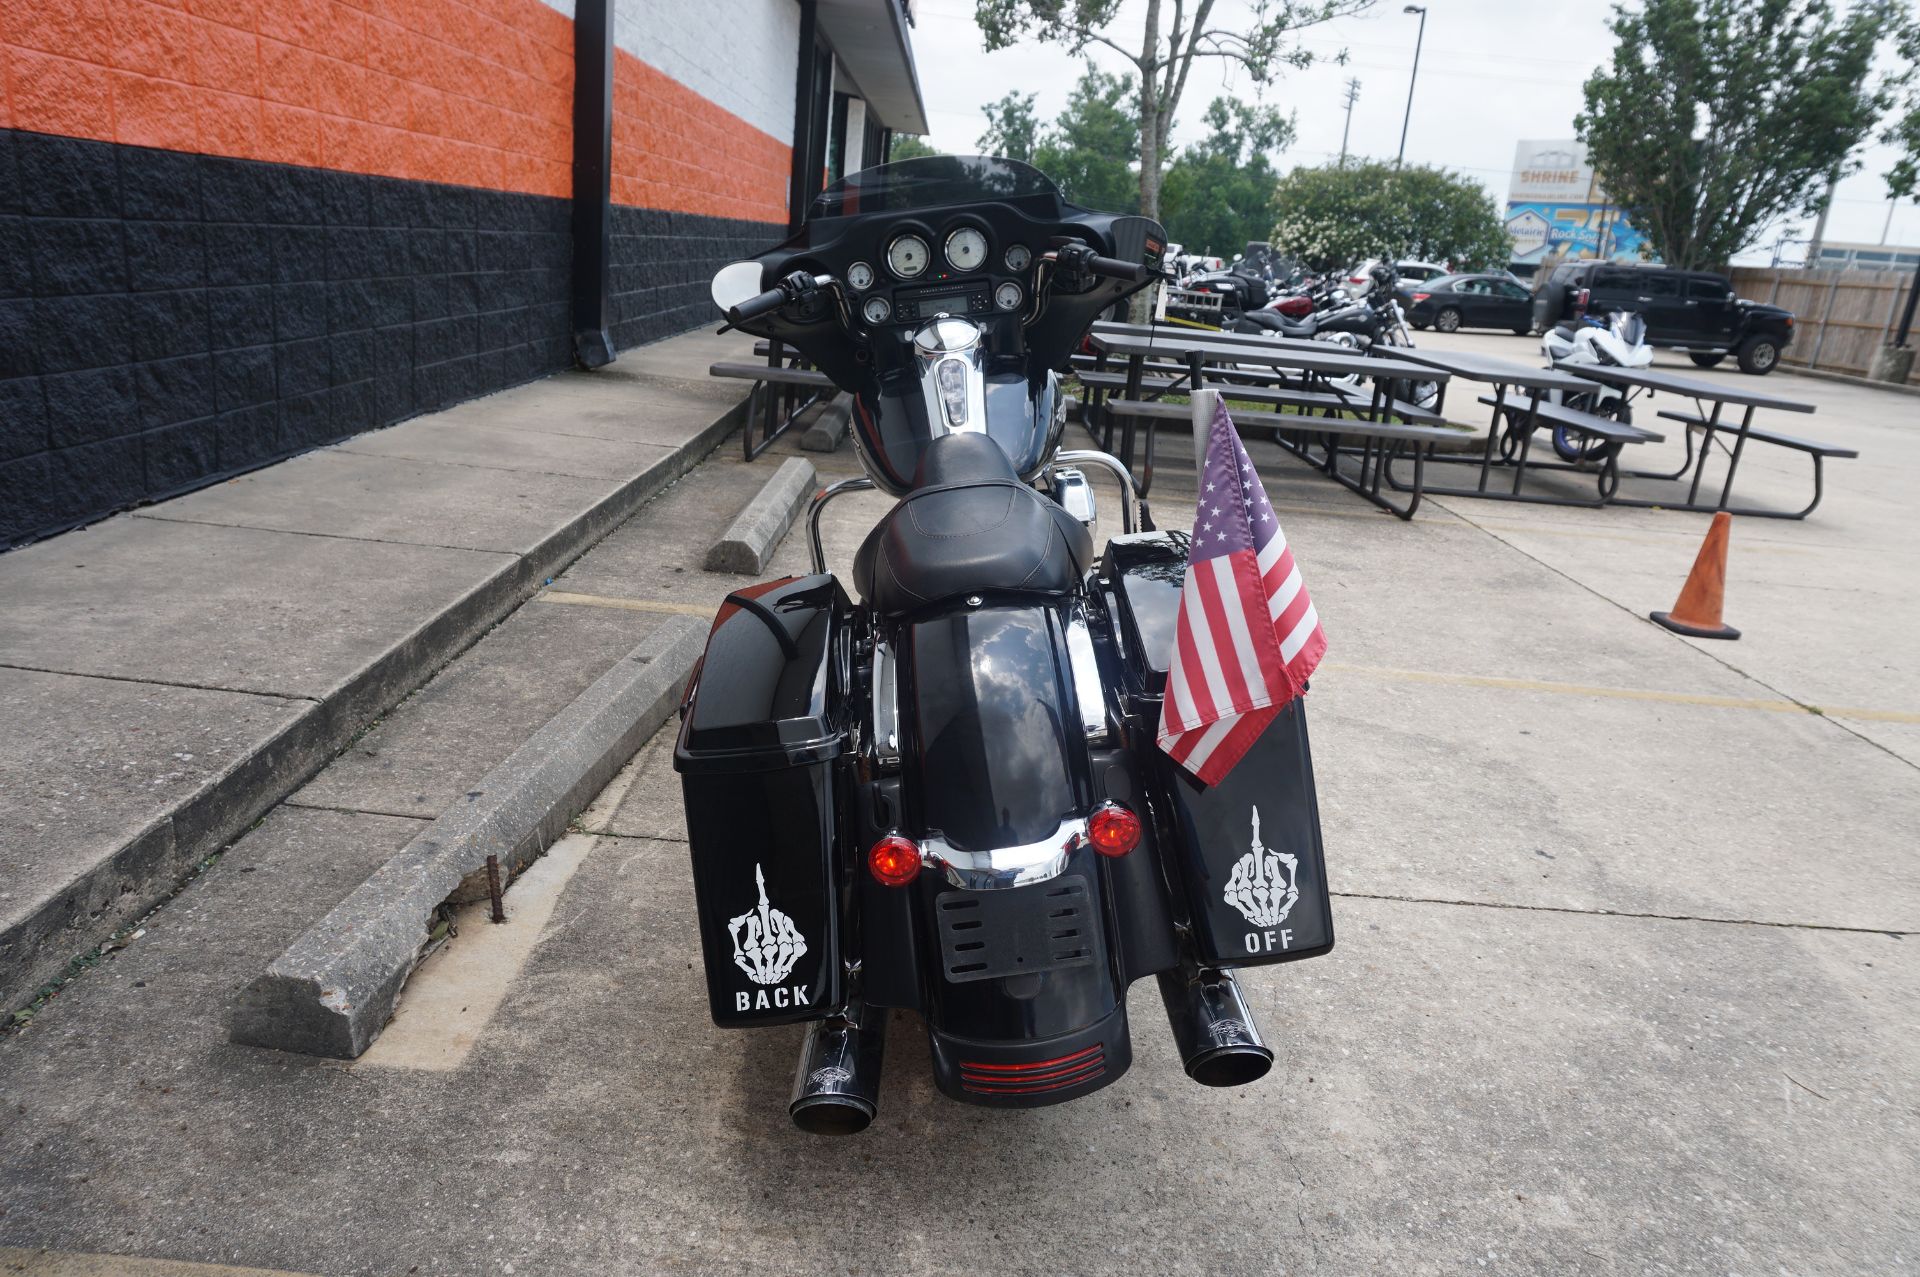 2013 Harley-Davidson Street Glide® in Metairie, Louisiana - Photo 8